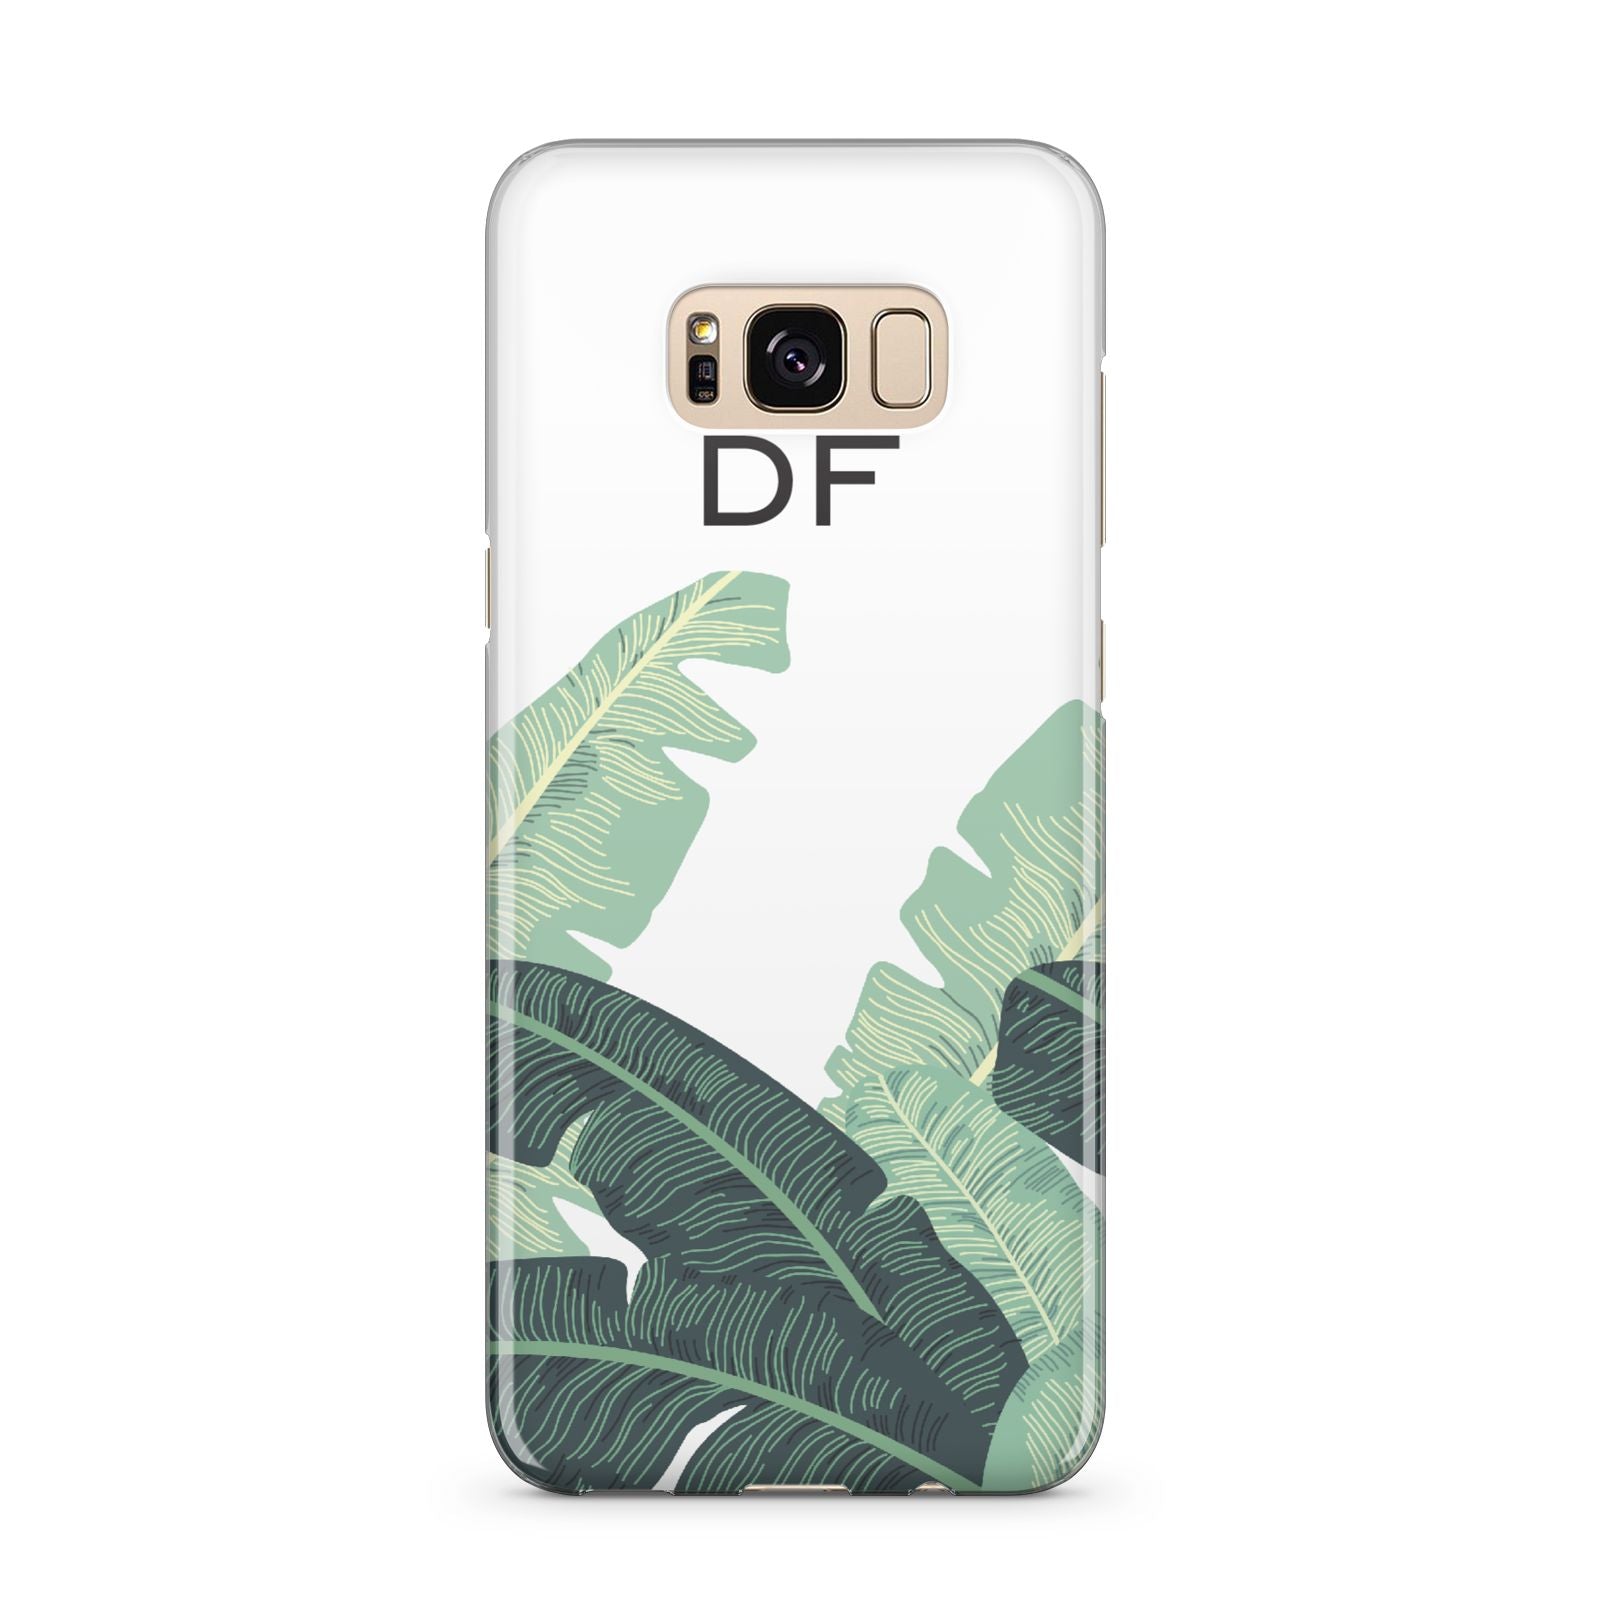 Personalised White Banana Leaf Samsung Galaxy S8 Plus Case